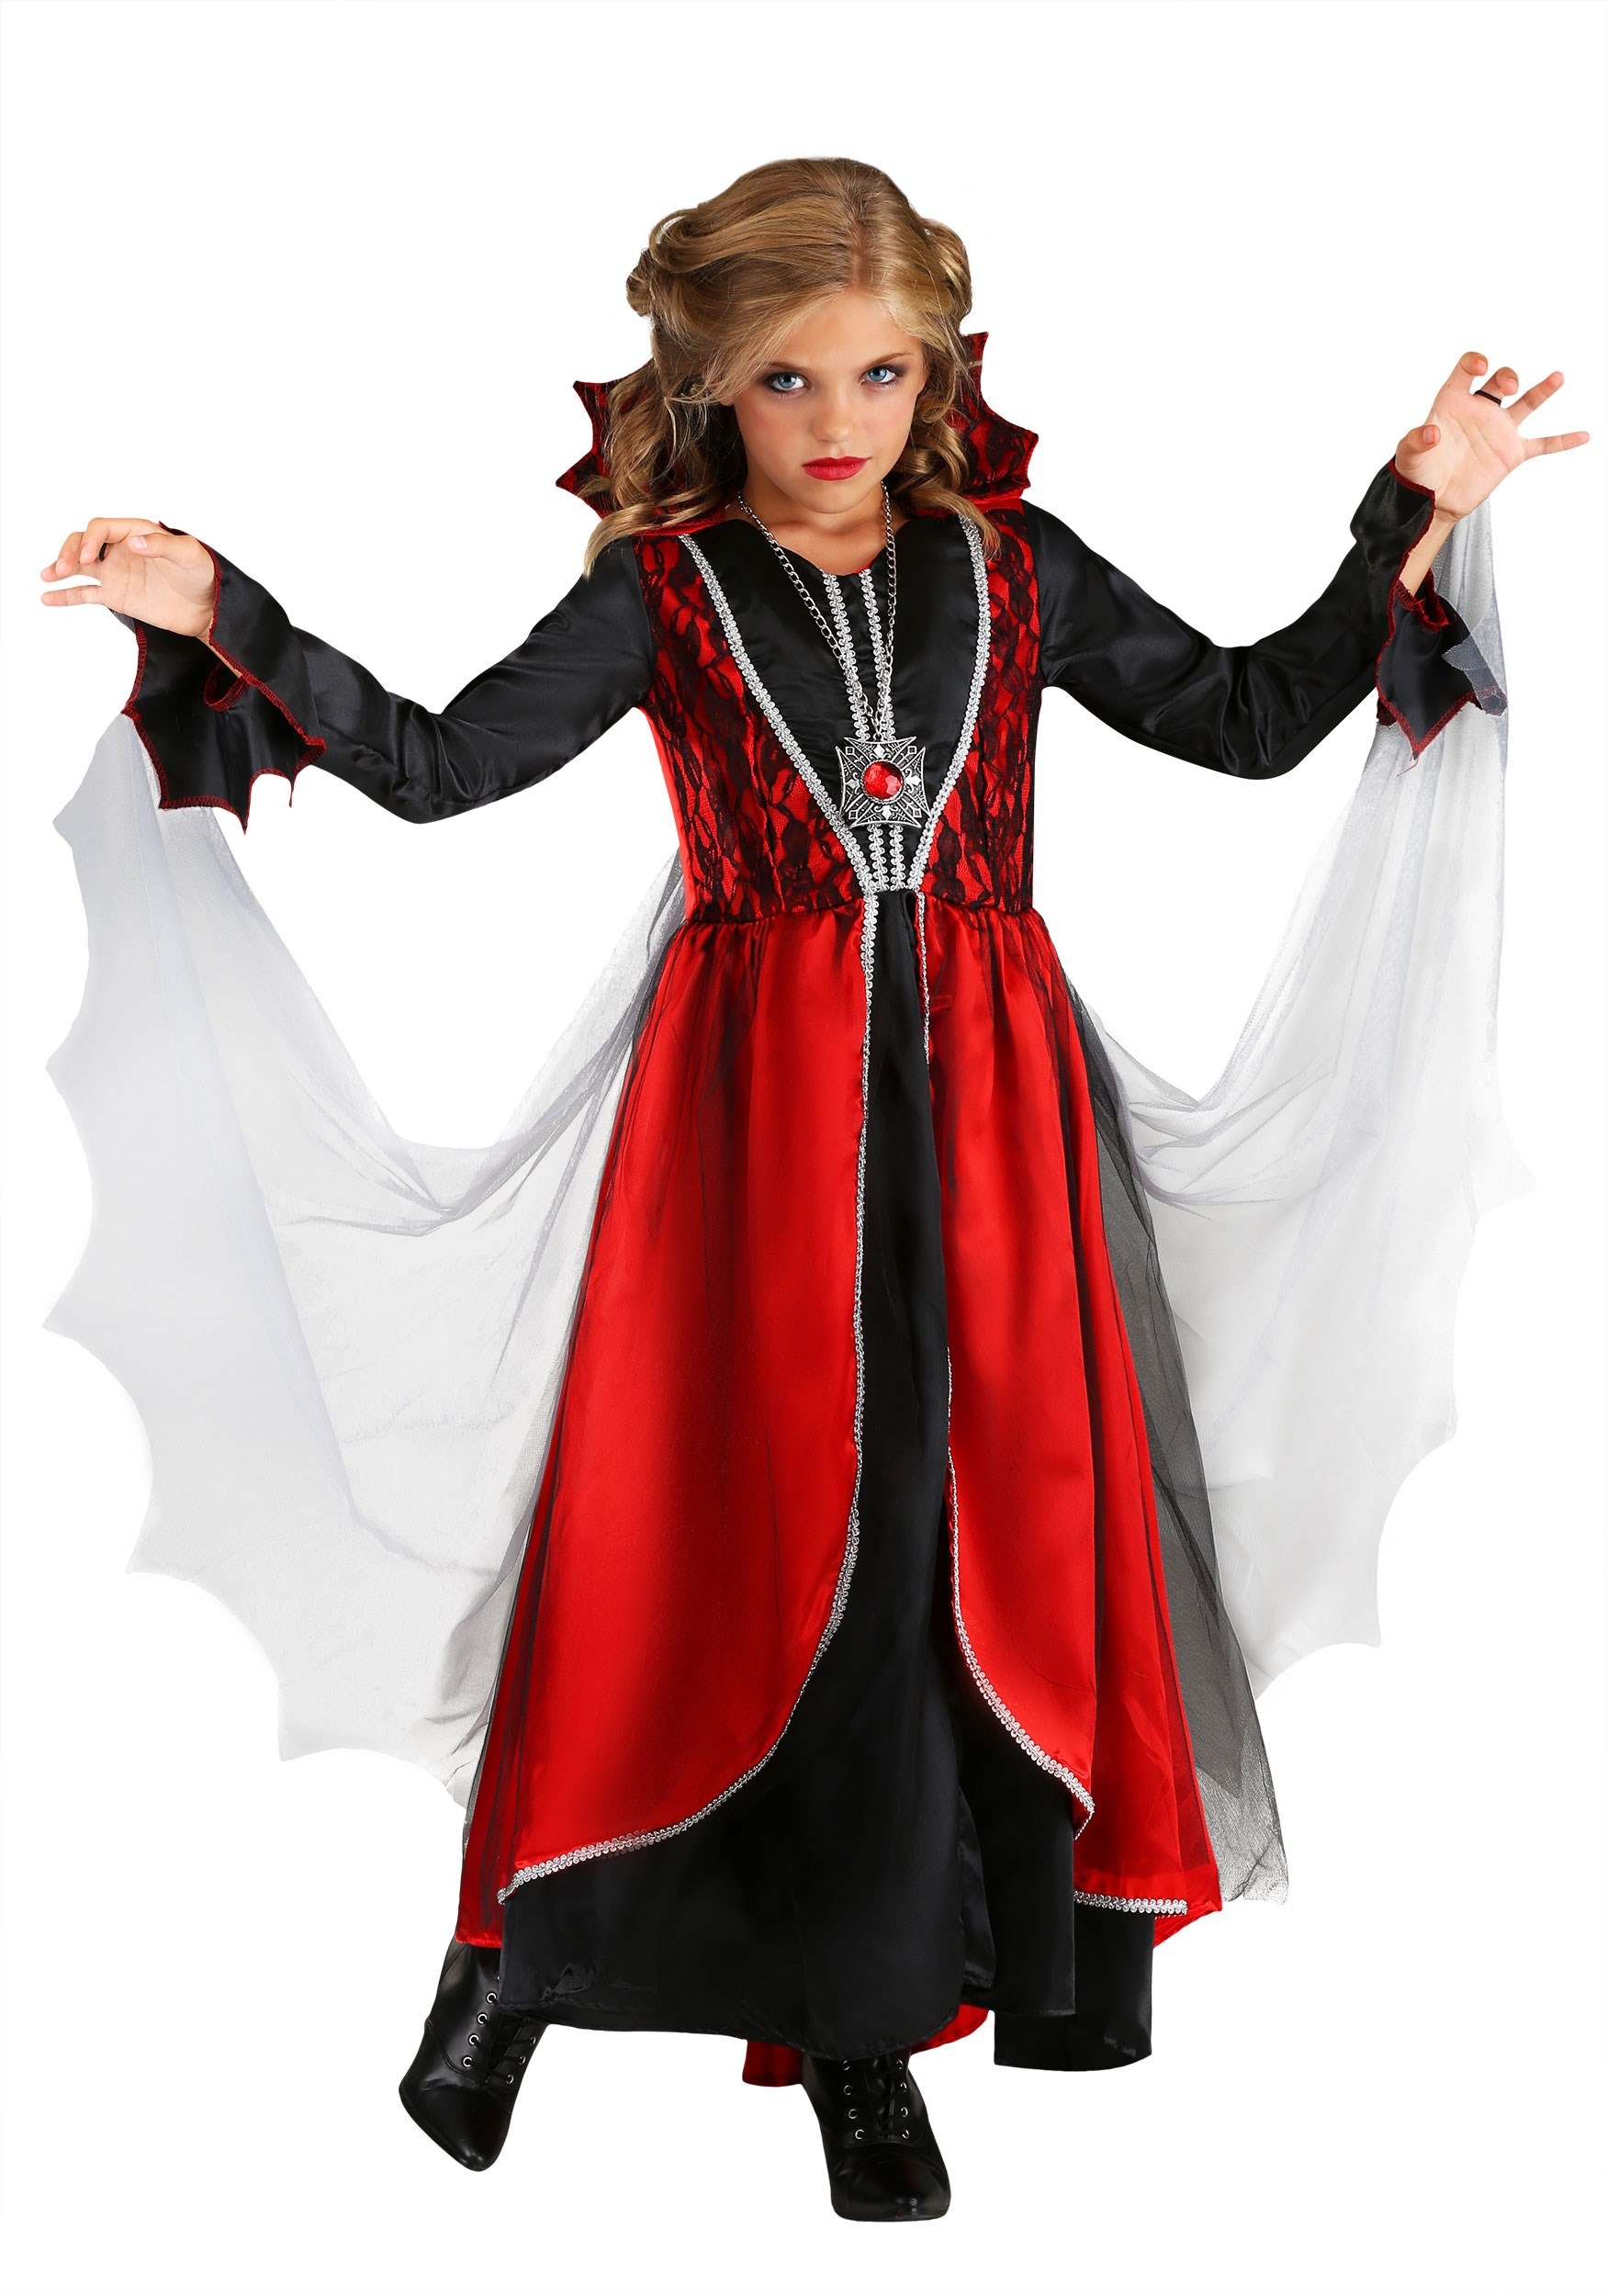 Vampiro Halloween, Vampira para Meninas, Fantasia vestido rainha vampira,  fantasias Halloween para crianças vampiras meninas, acessórios cosplay com